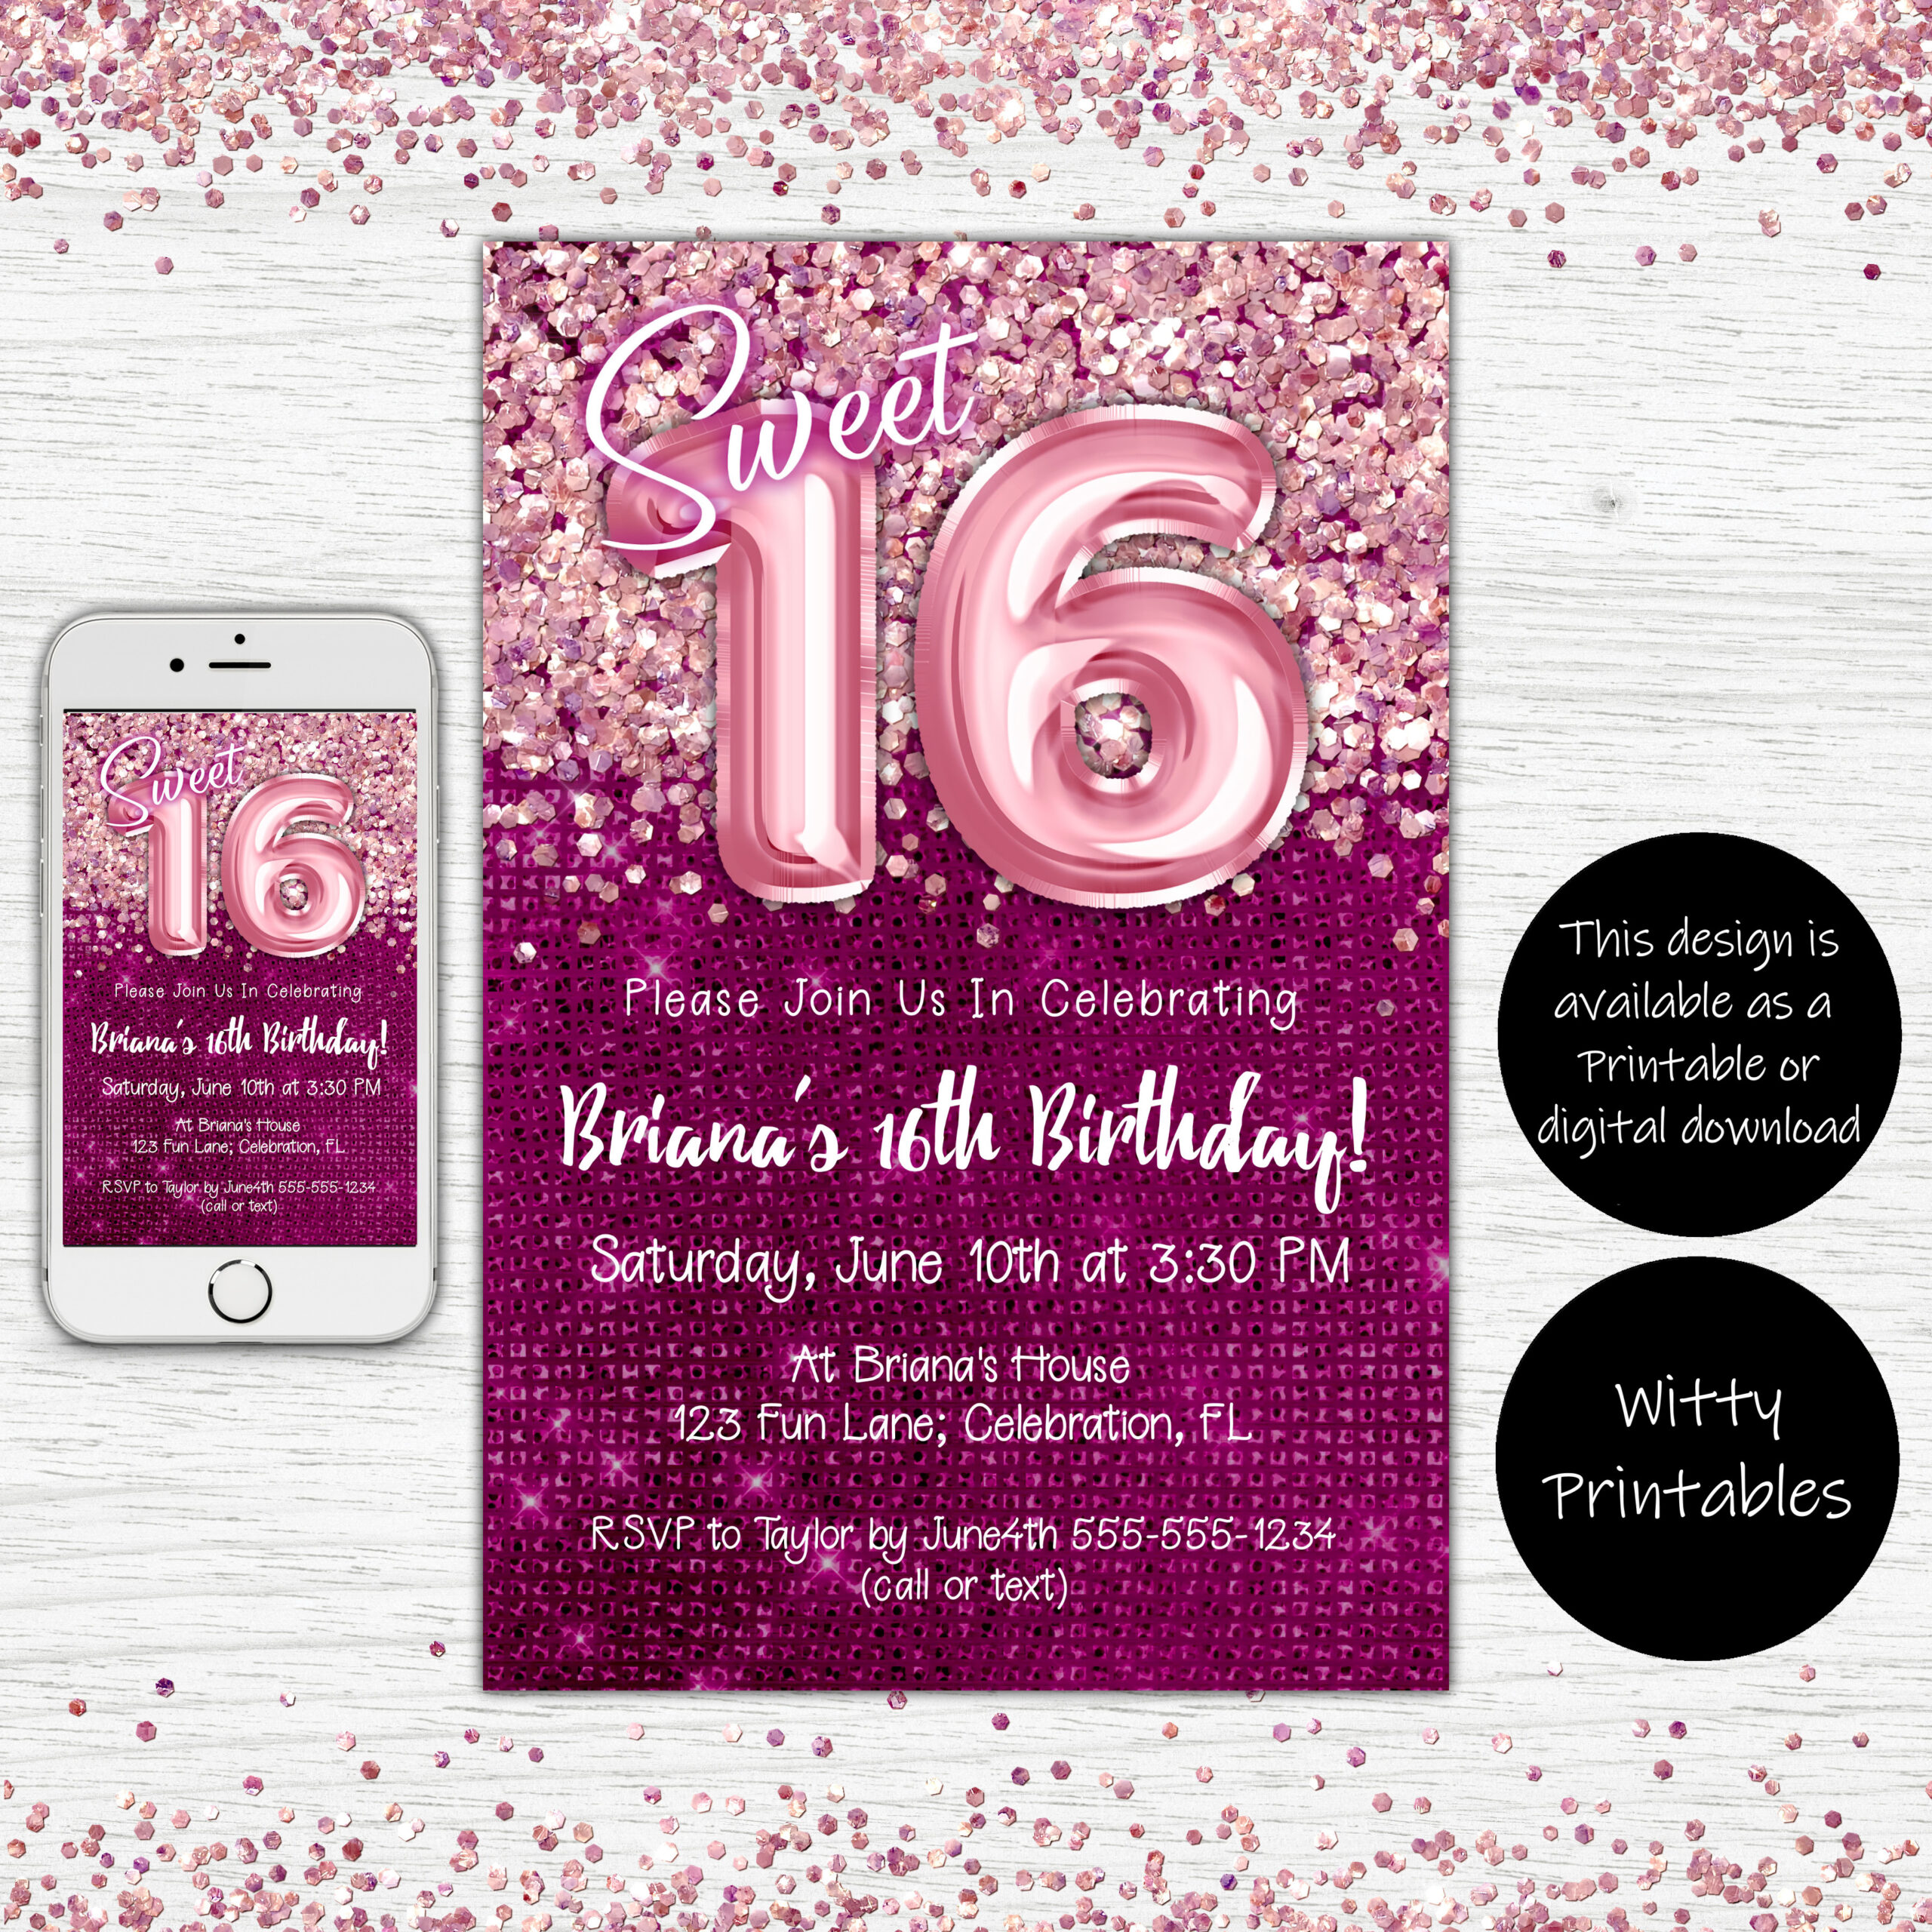 Sweet 16th birthday invitation, party invite, magenta, pink, glitter